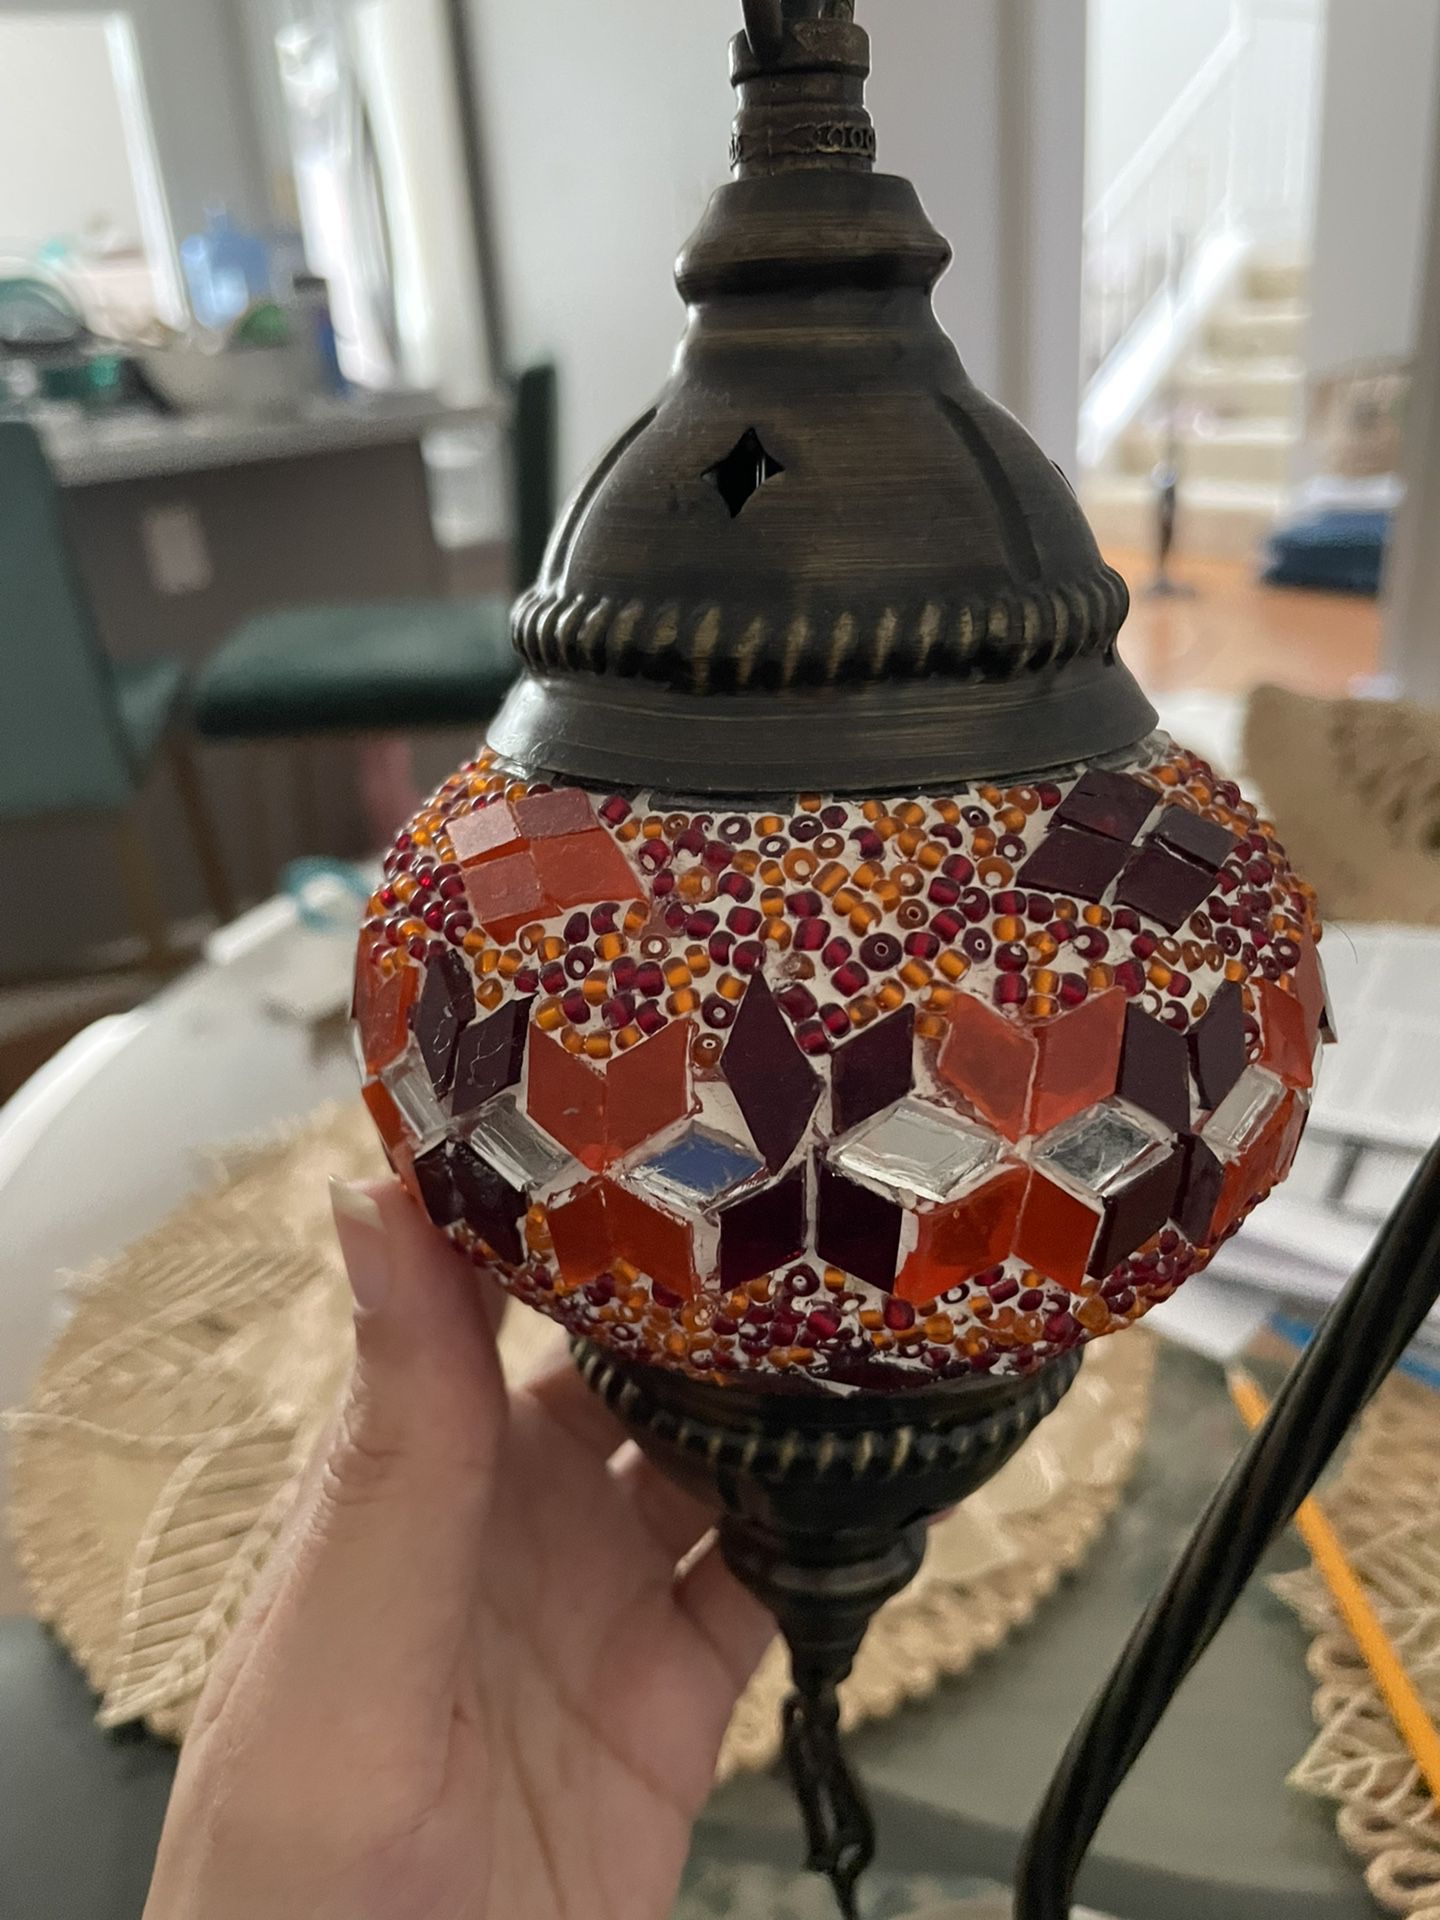 Turkish Lamps From Dubai 